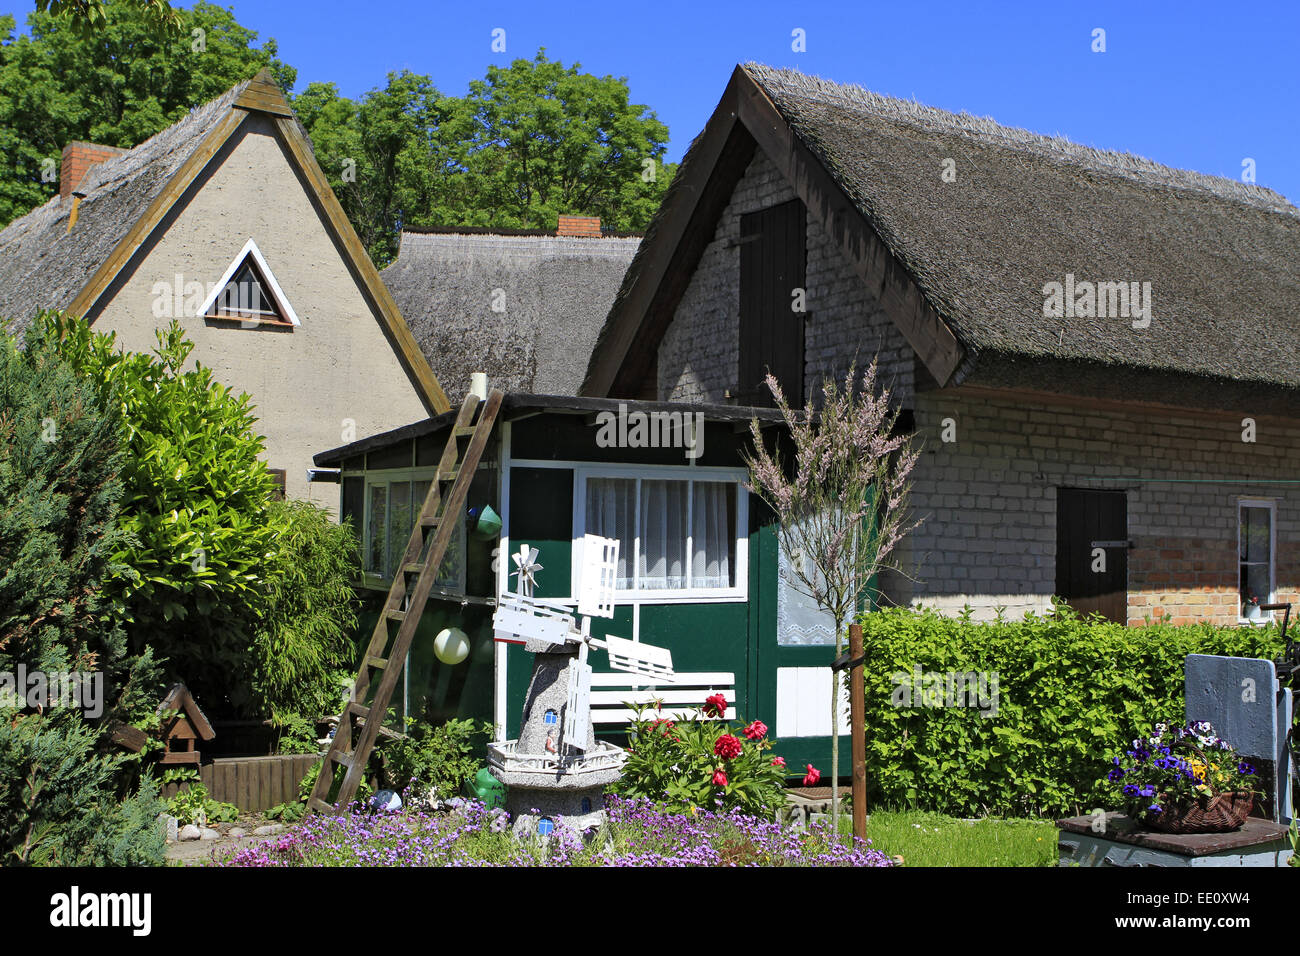 Dorf Vitt, Kap Arkona, Insel Ruegen, Mecklenburg-Vorpommern, Deutschland Stock Photo